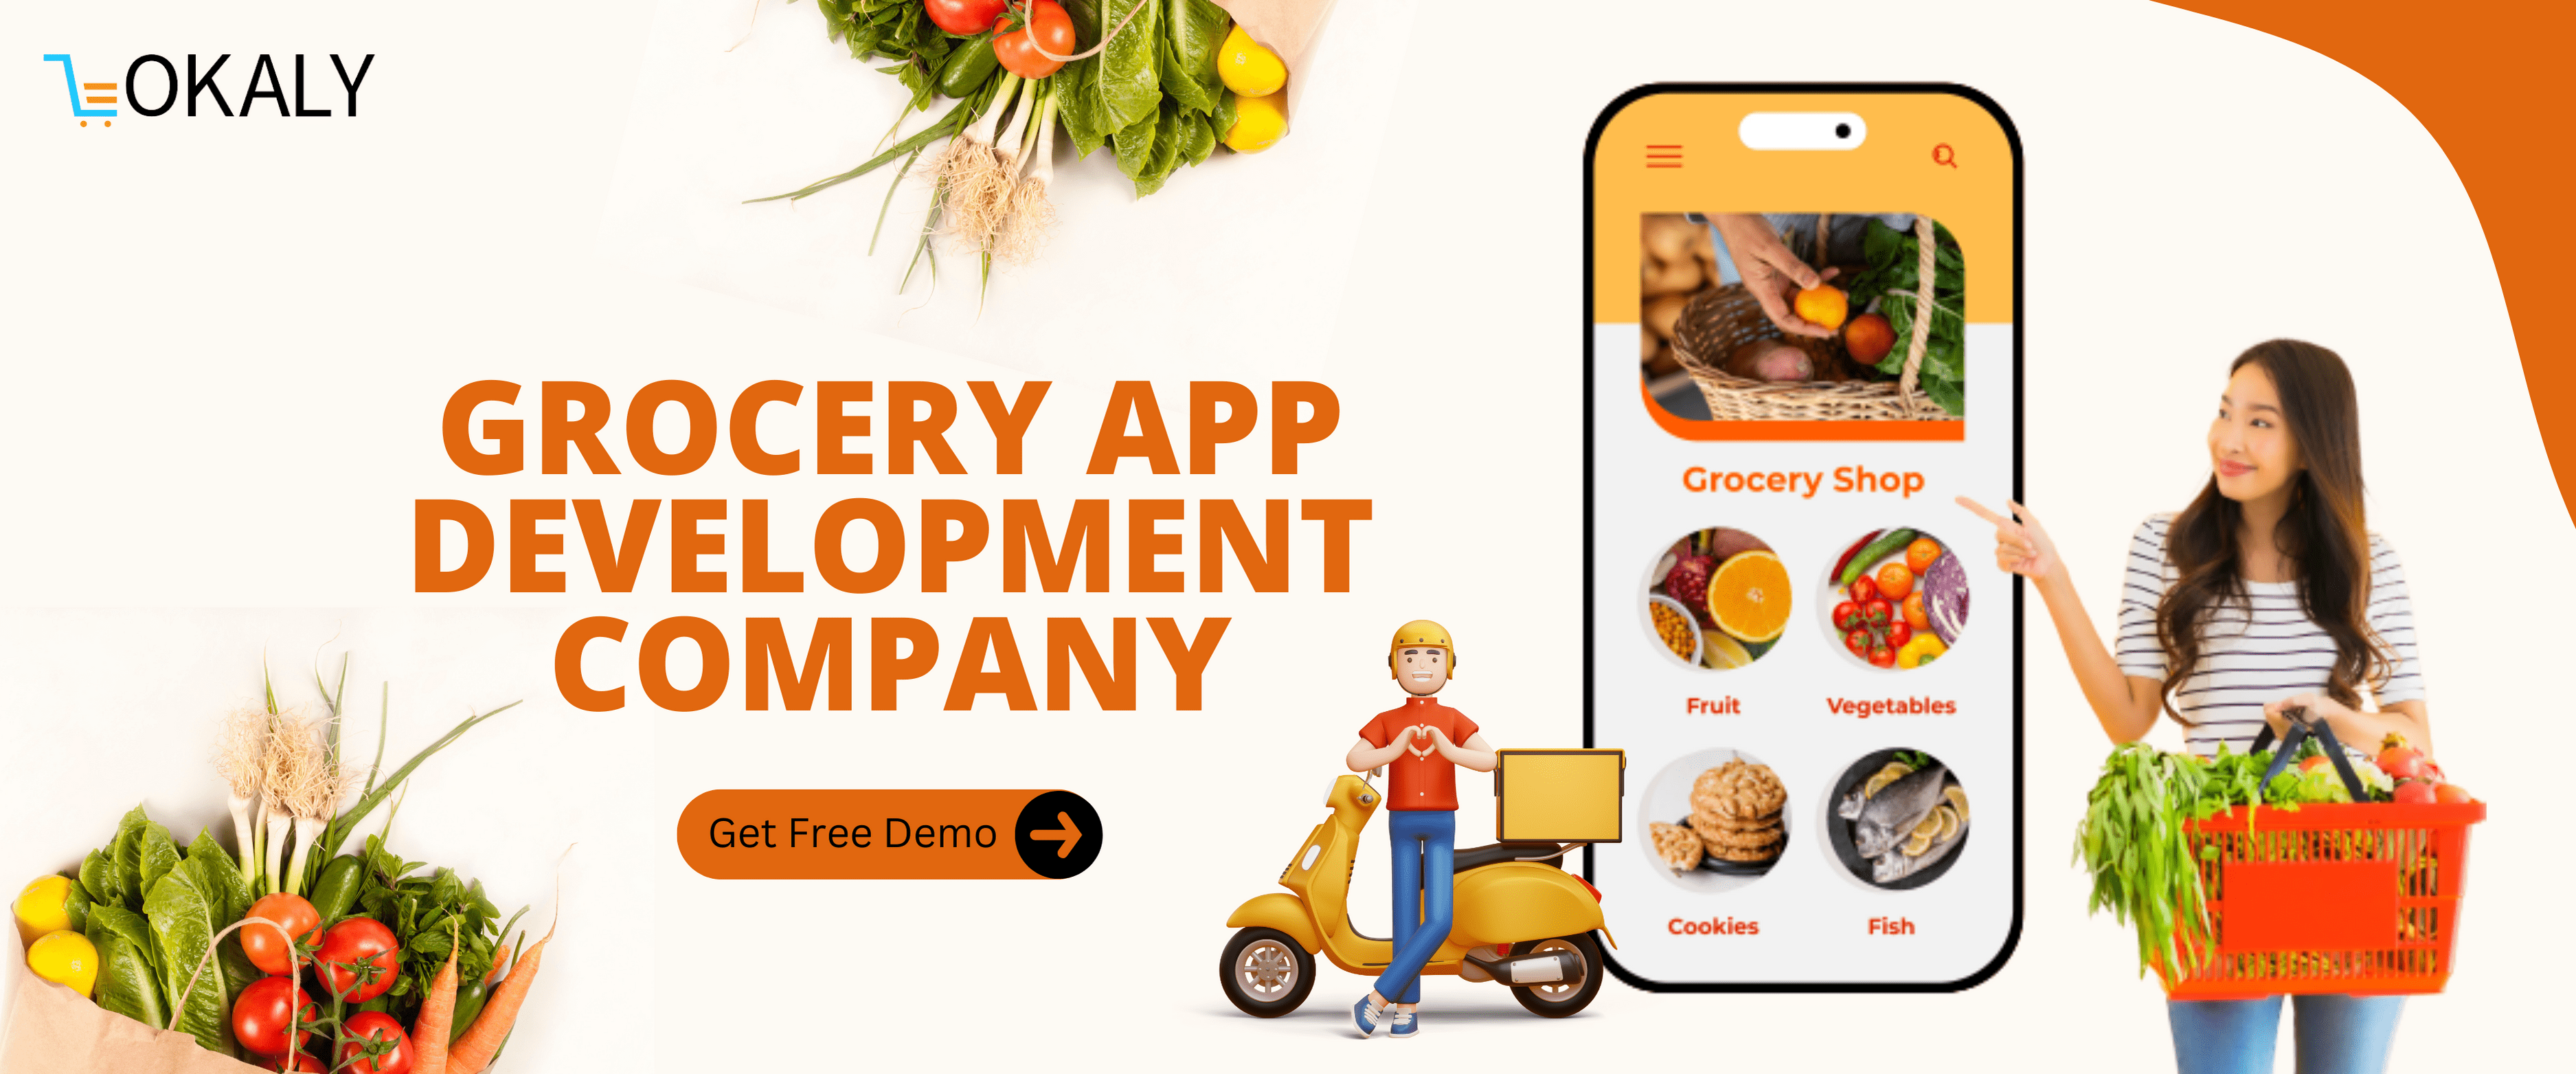 Grocery App Development Company | Lokaly